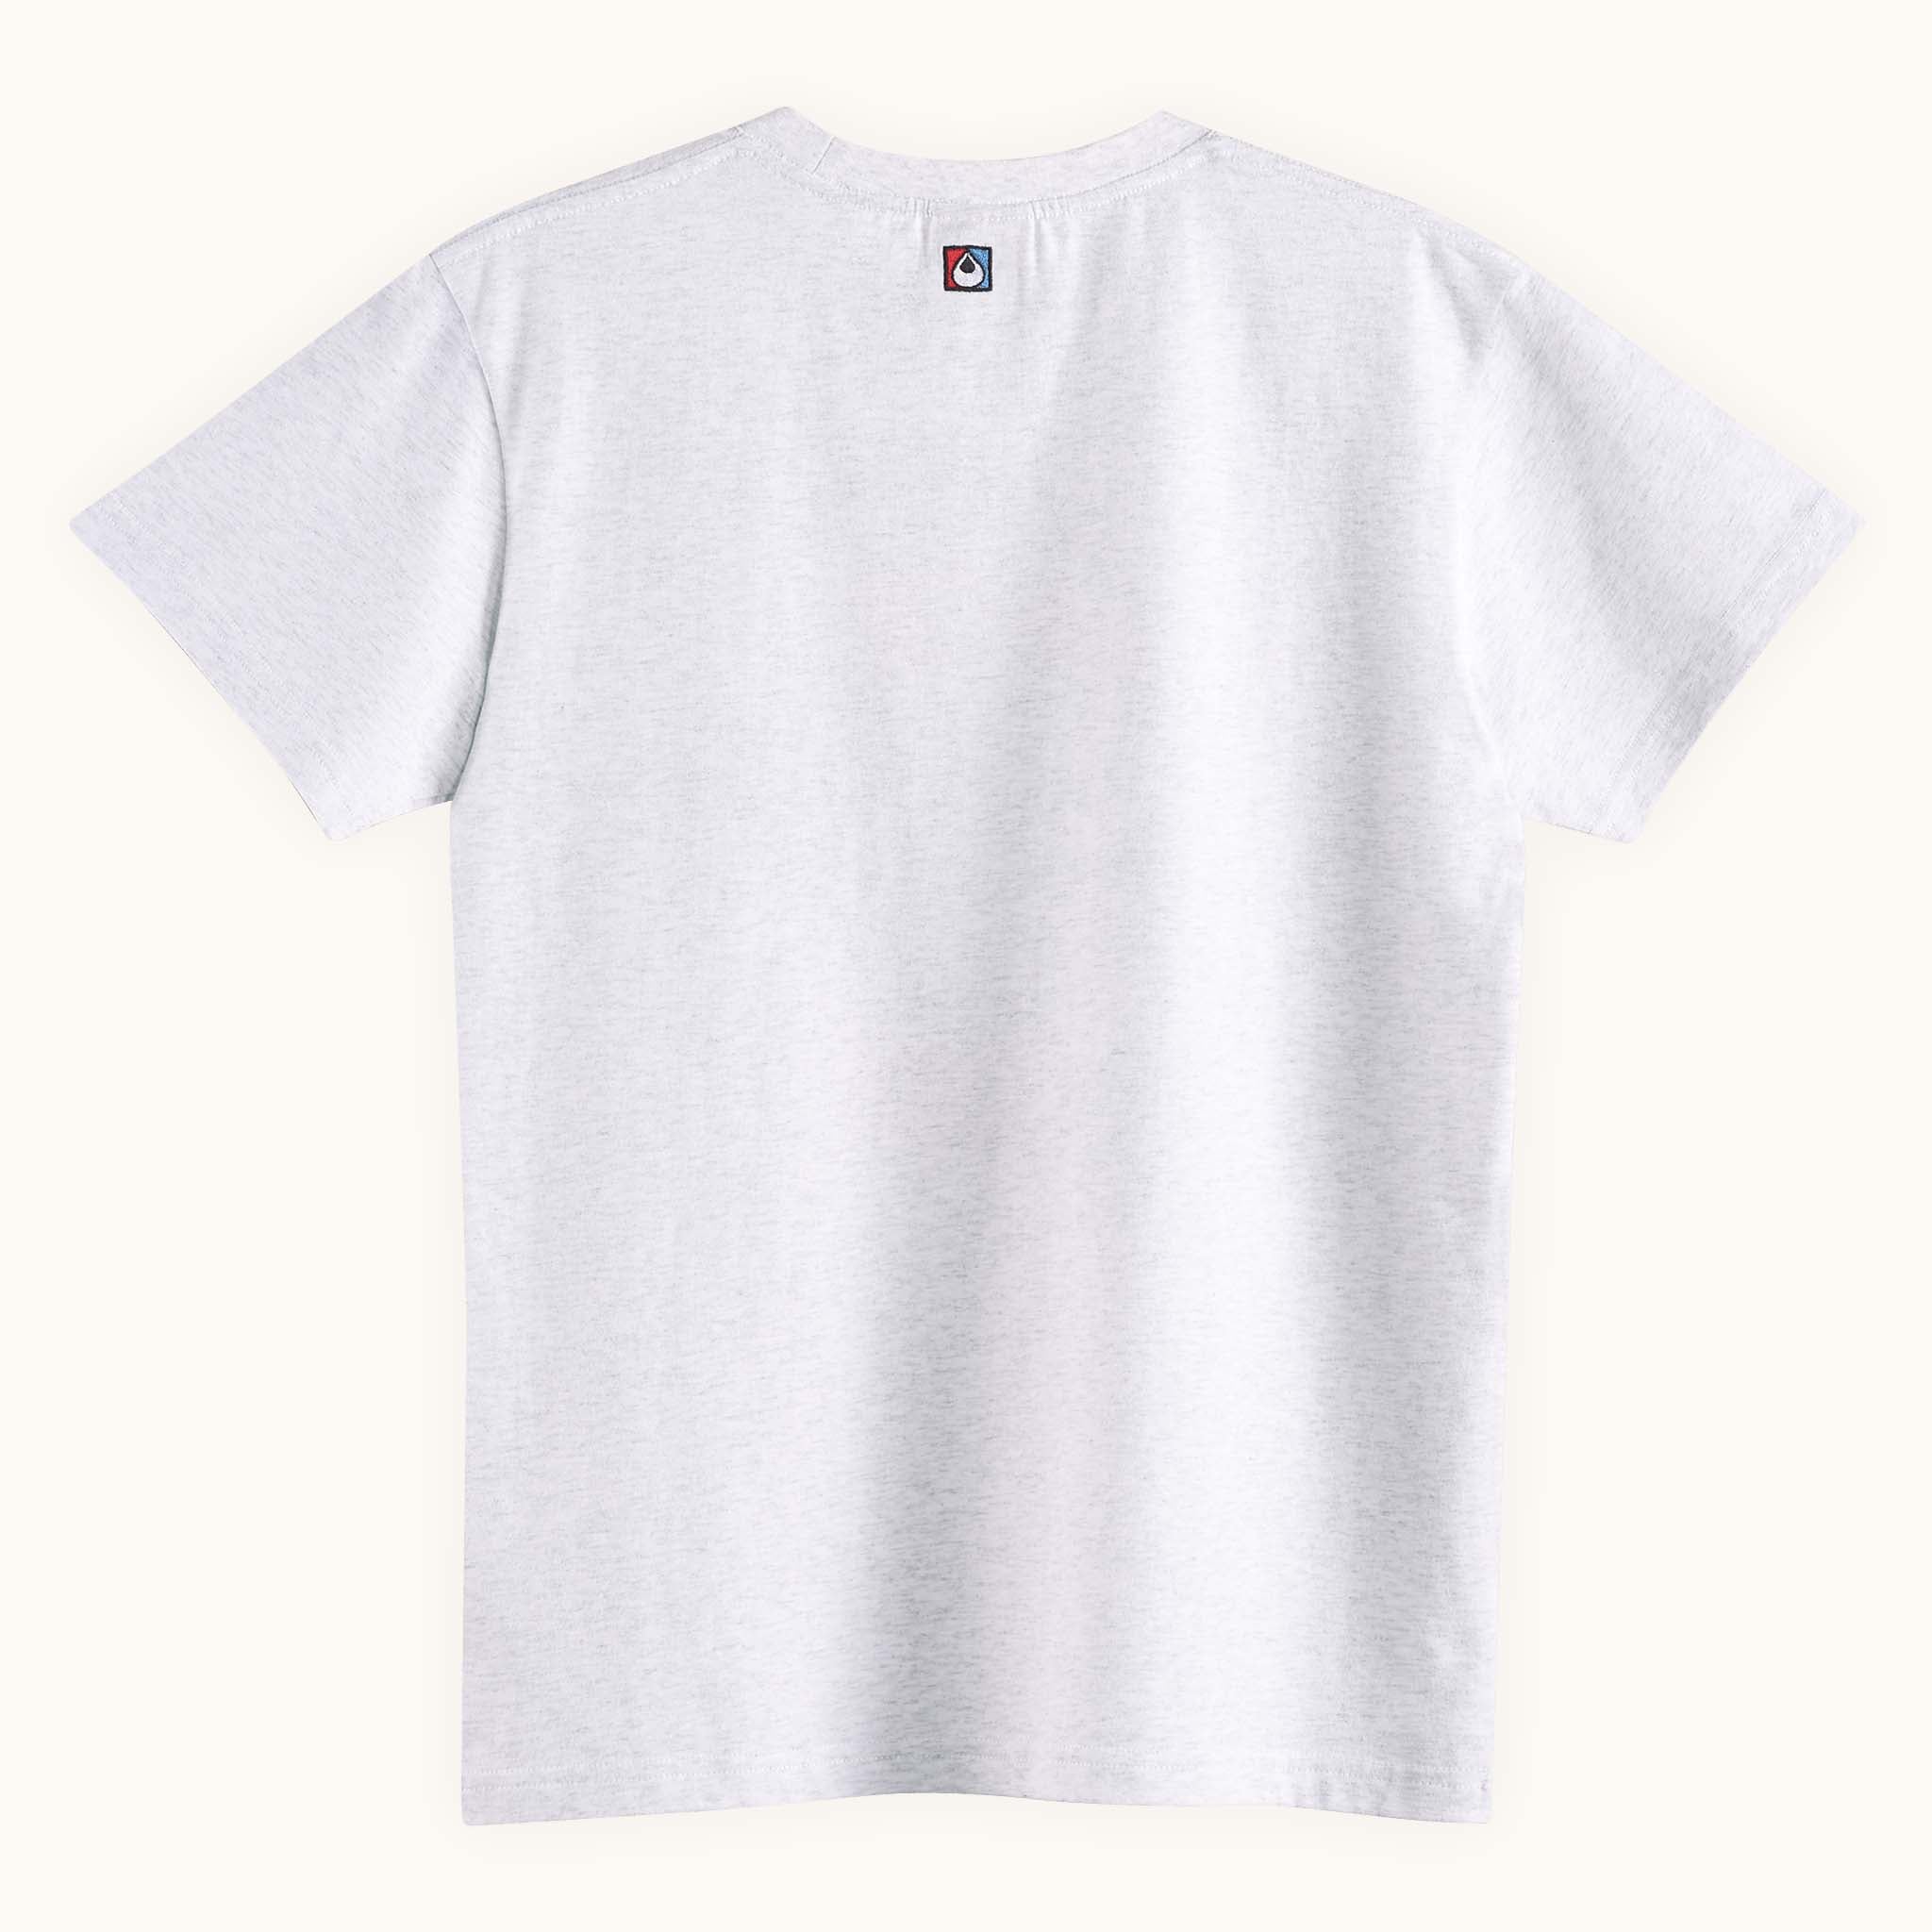 mens white printed vintage style t-shirt